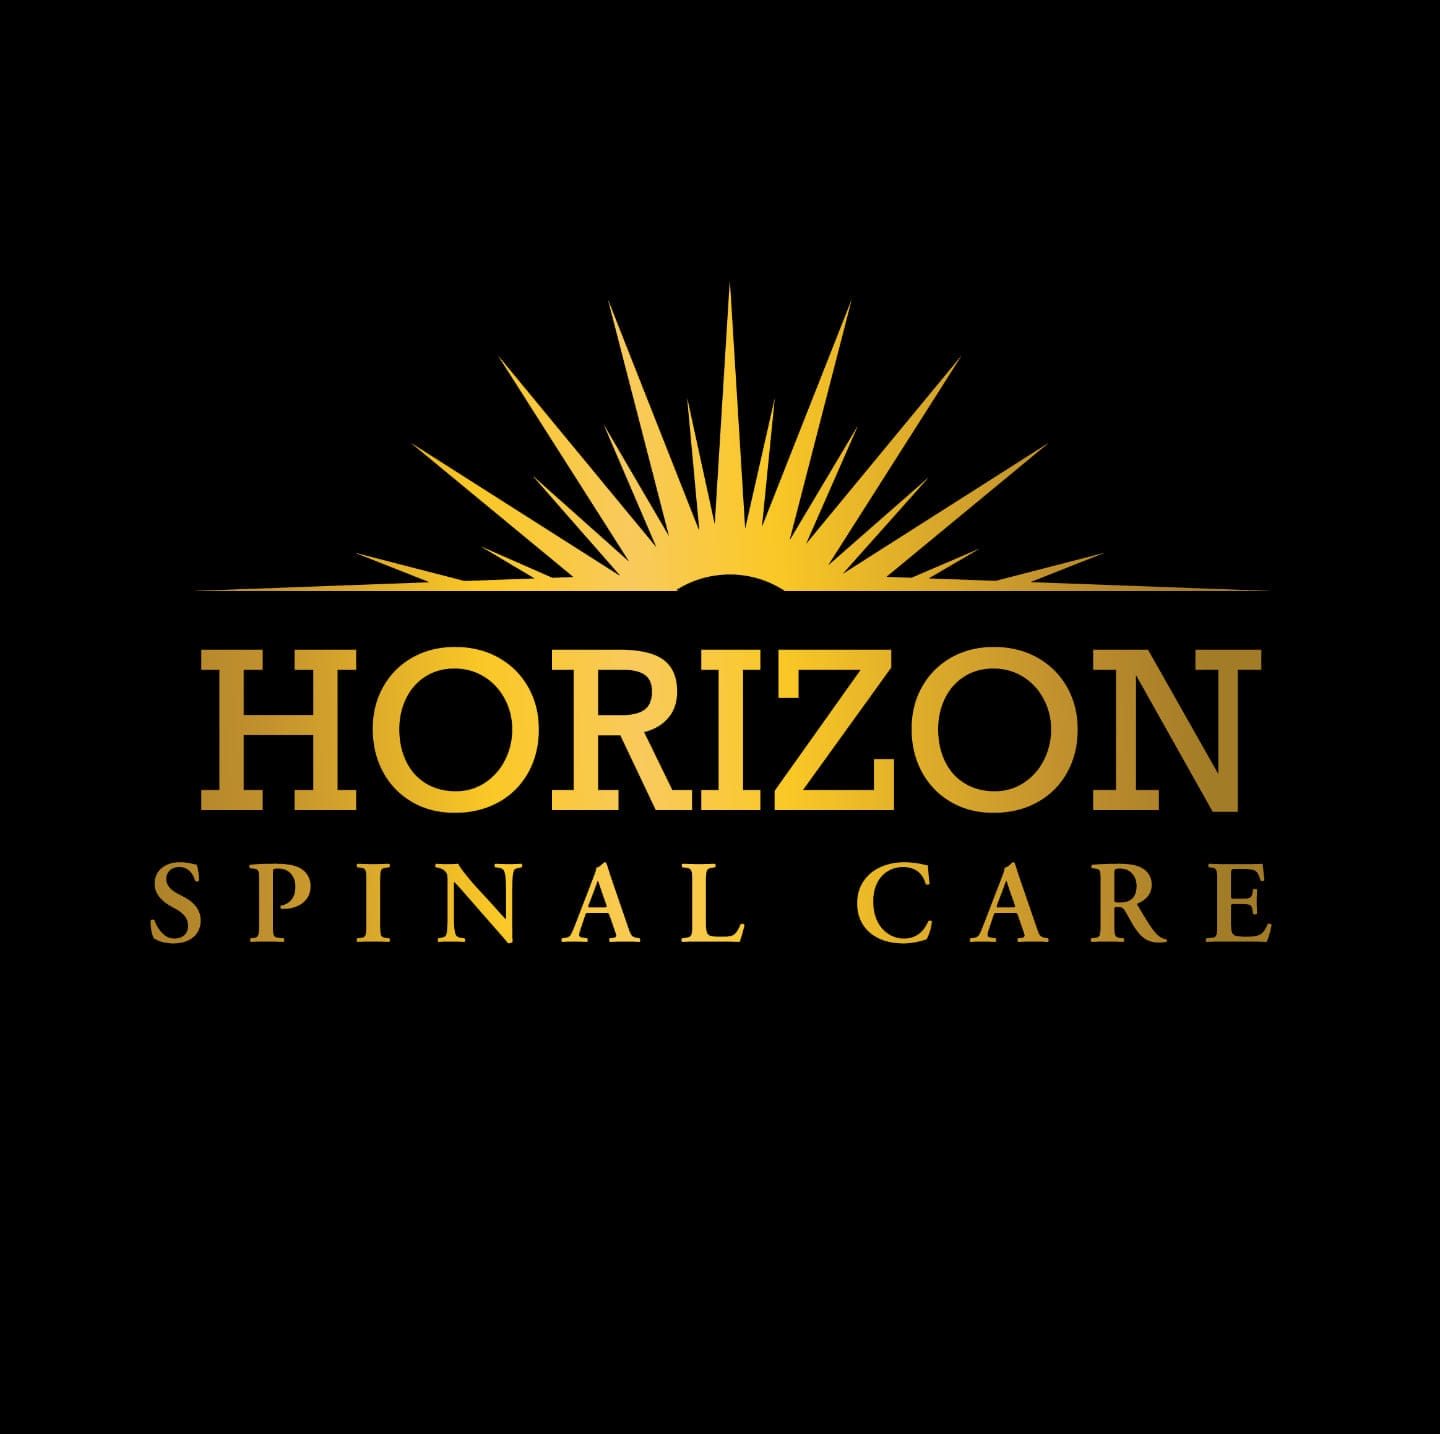 Horizon Spinal Care